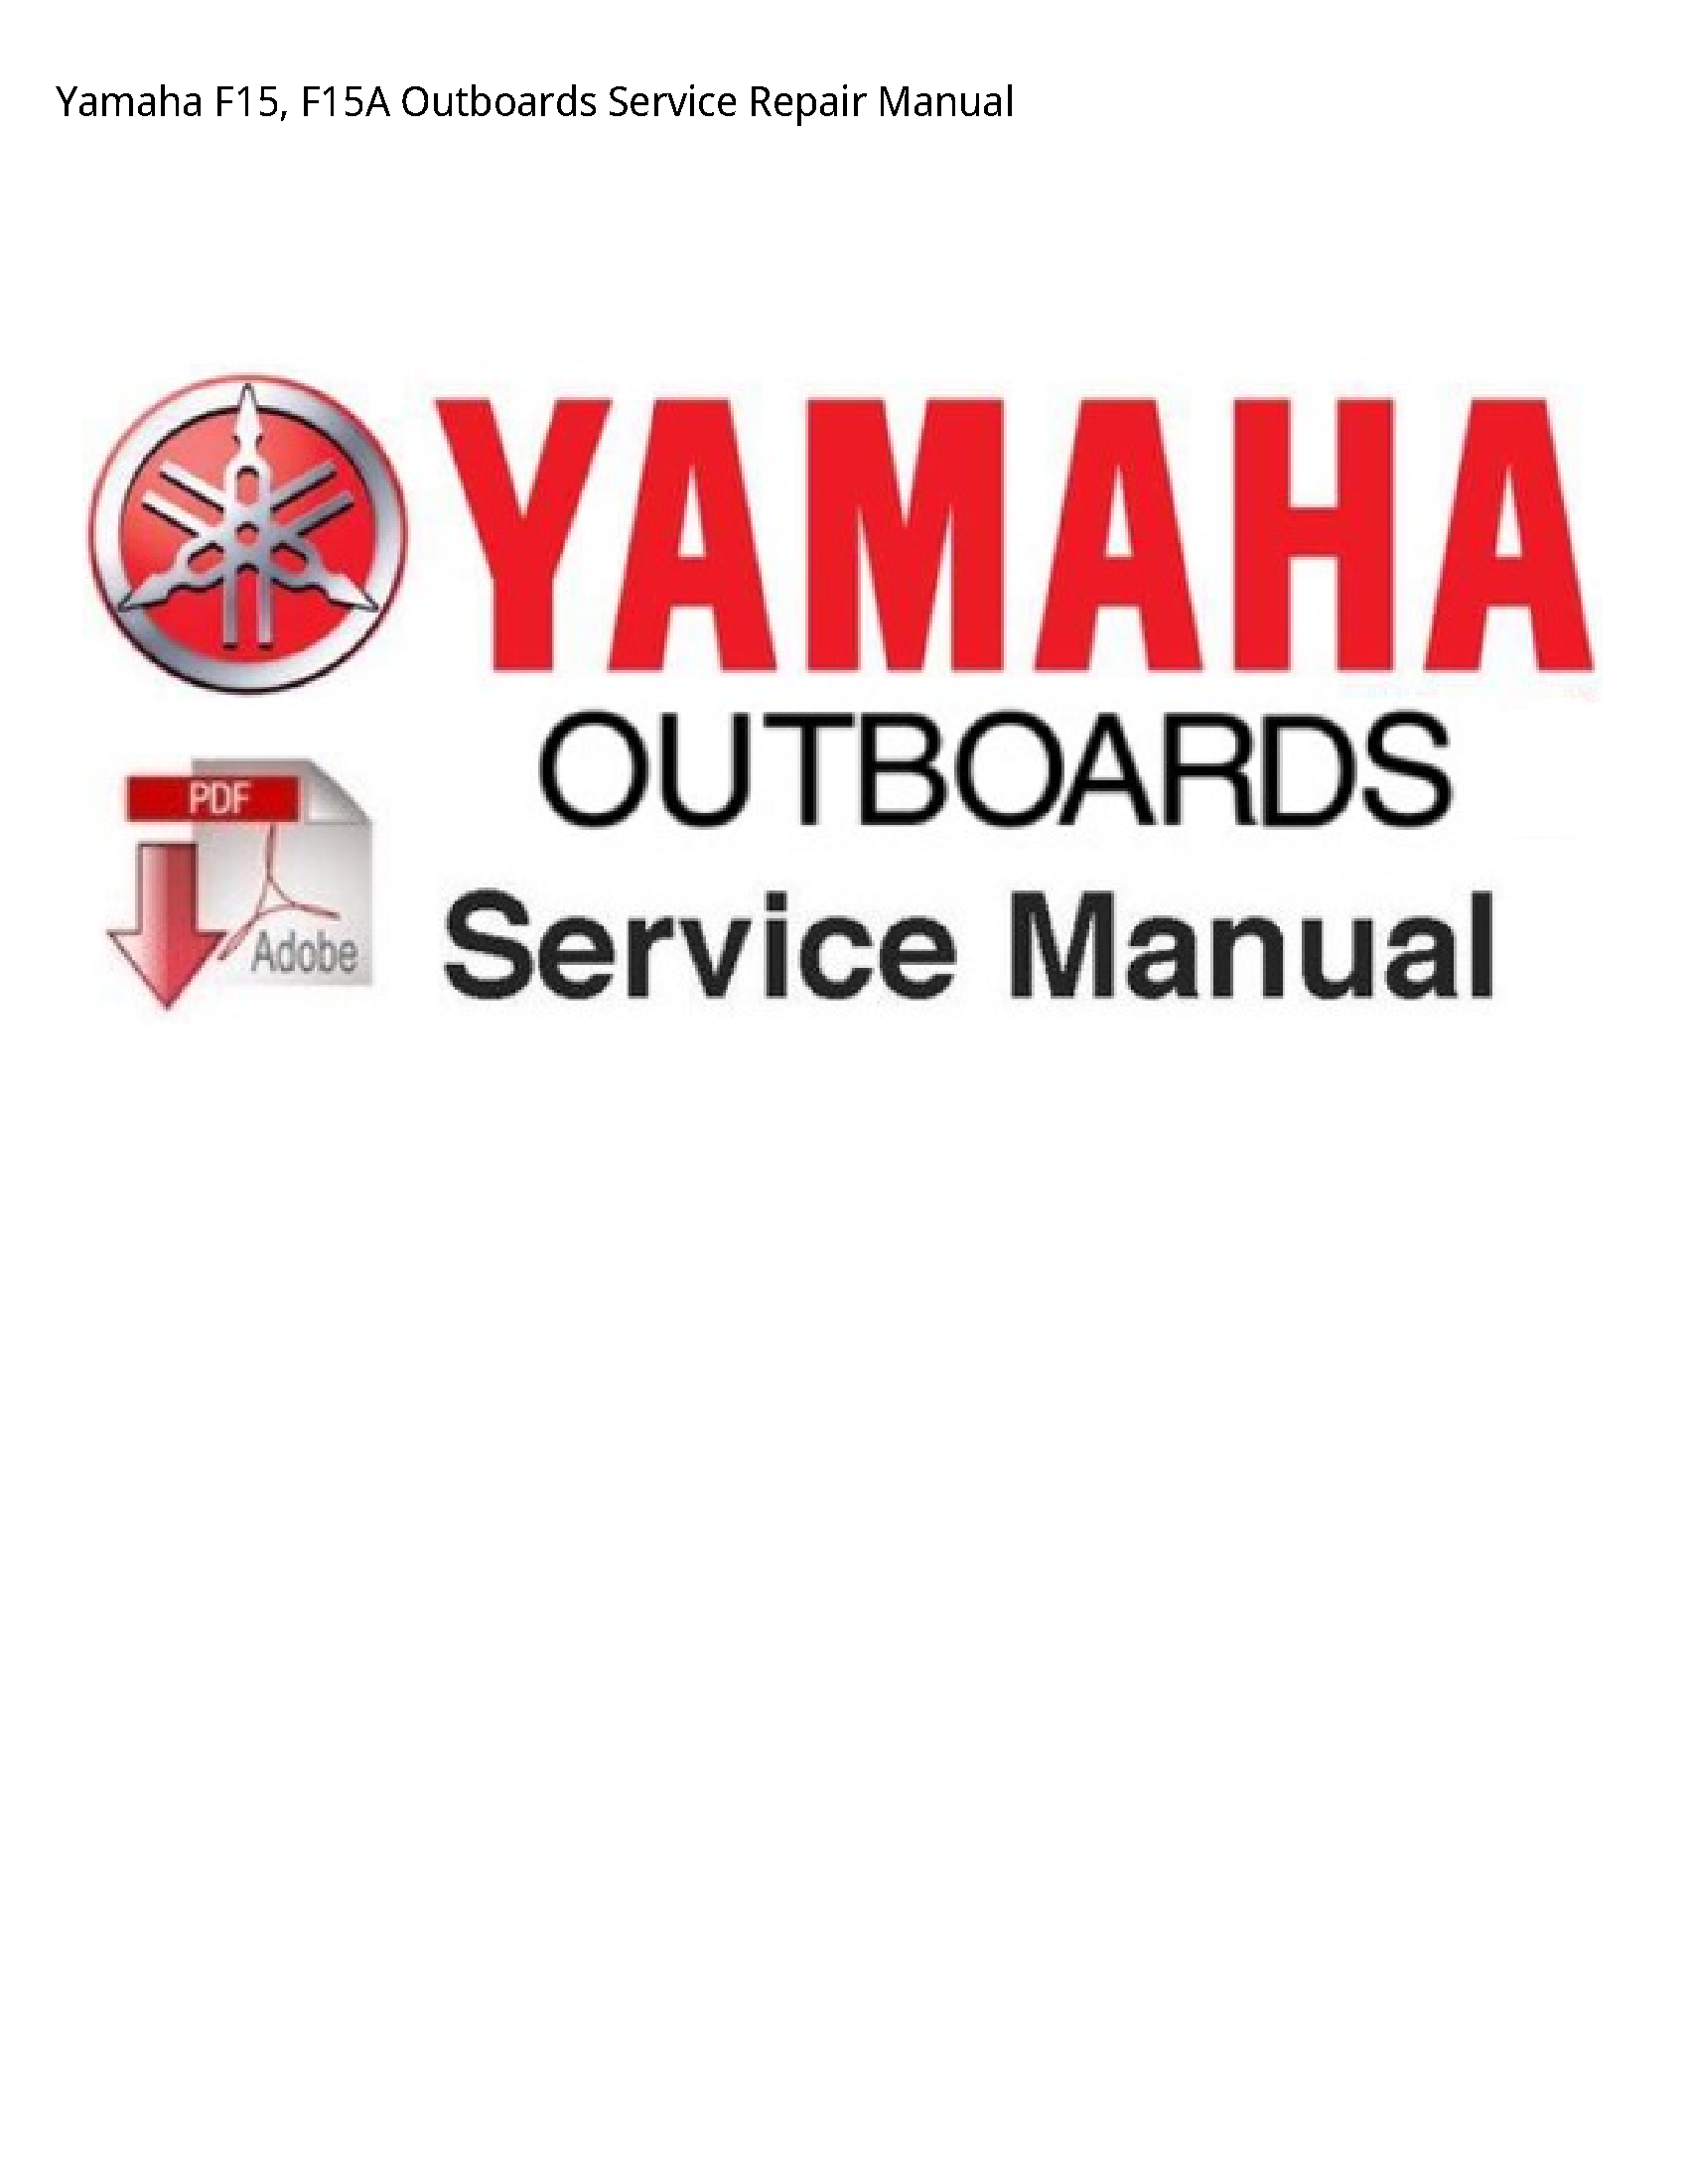 Yamaha F15 Outboards manual